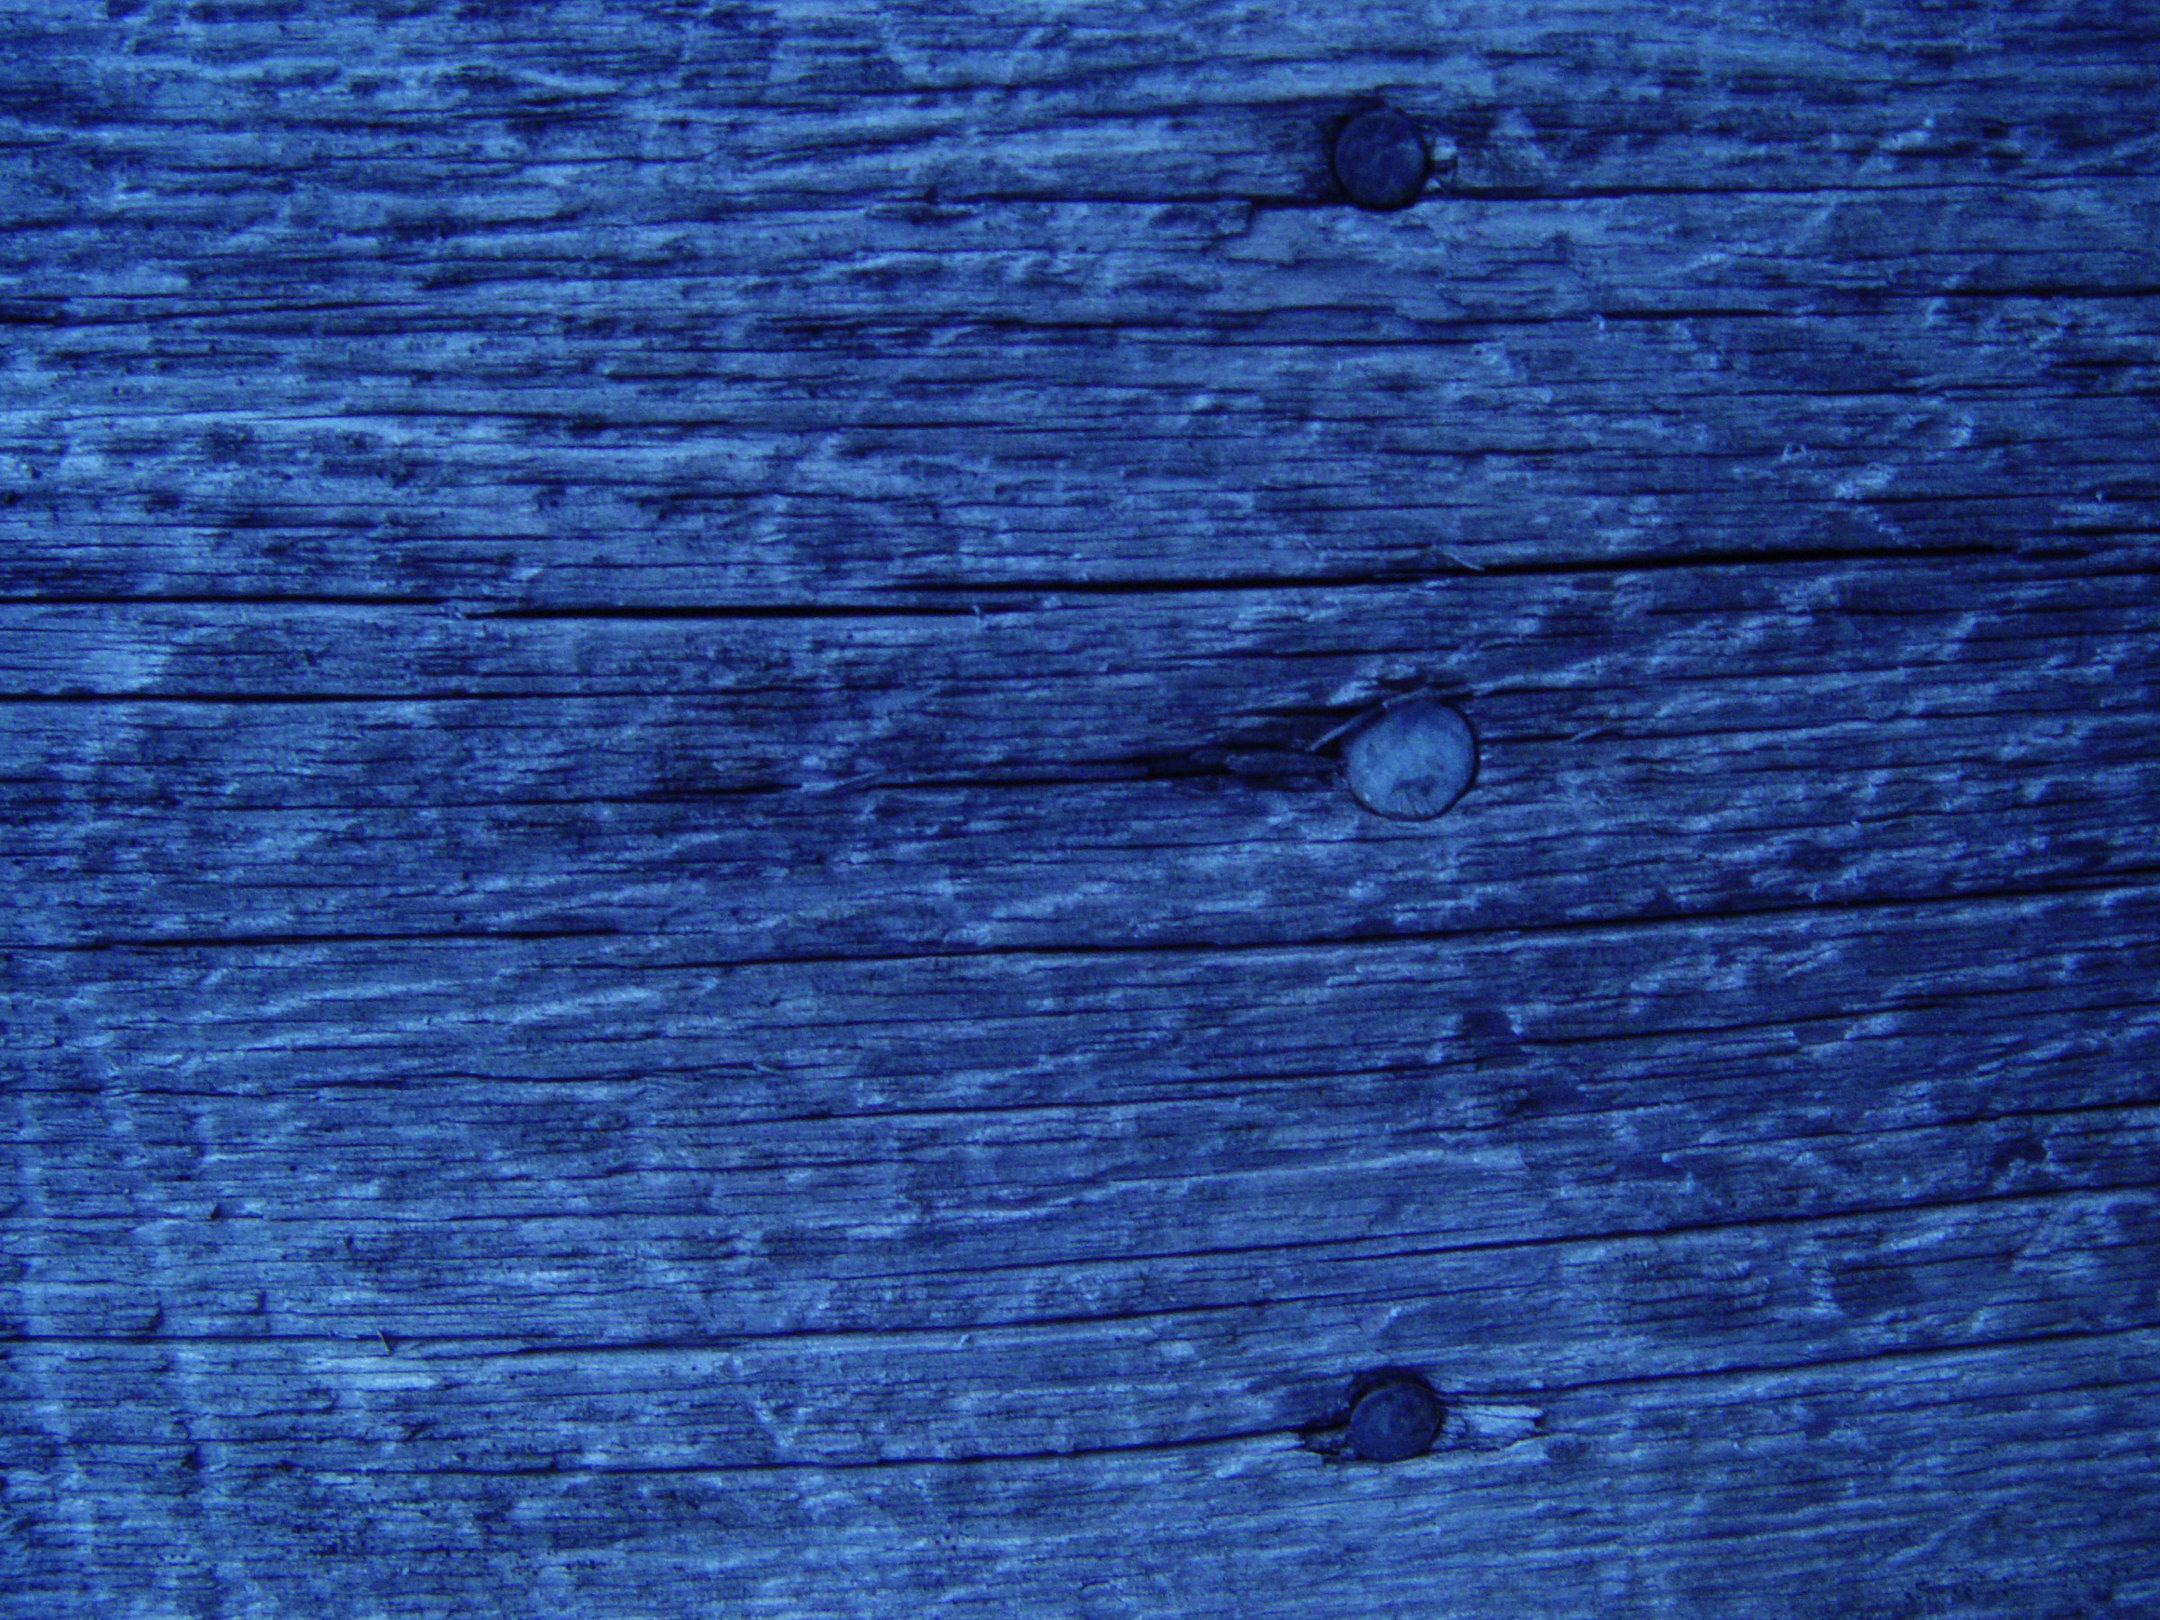 Blue Fence Nails by deathangel on DeviantArt